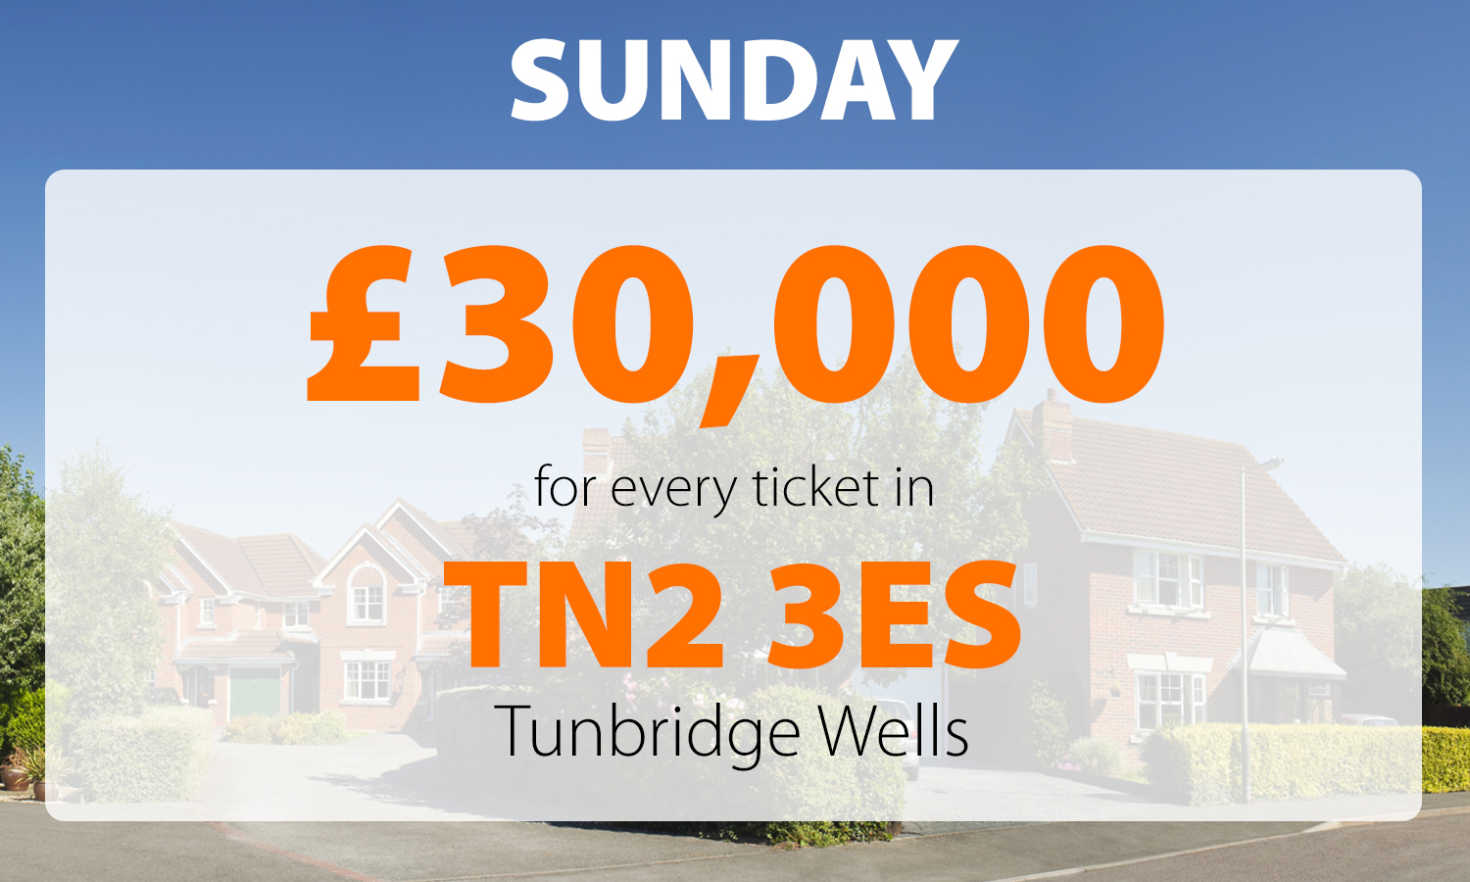 Two lucky Tunbridge Wells players won Sunday's Street Prize